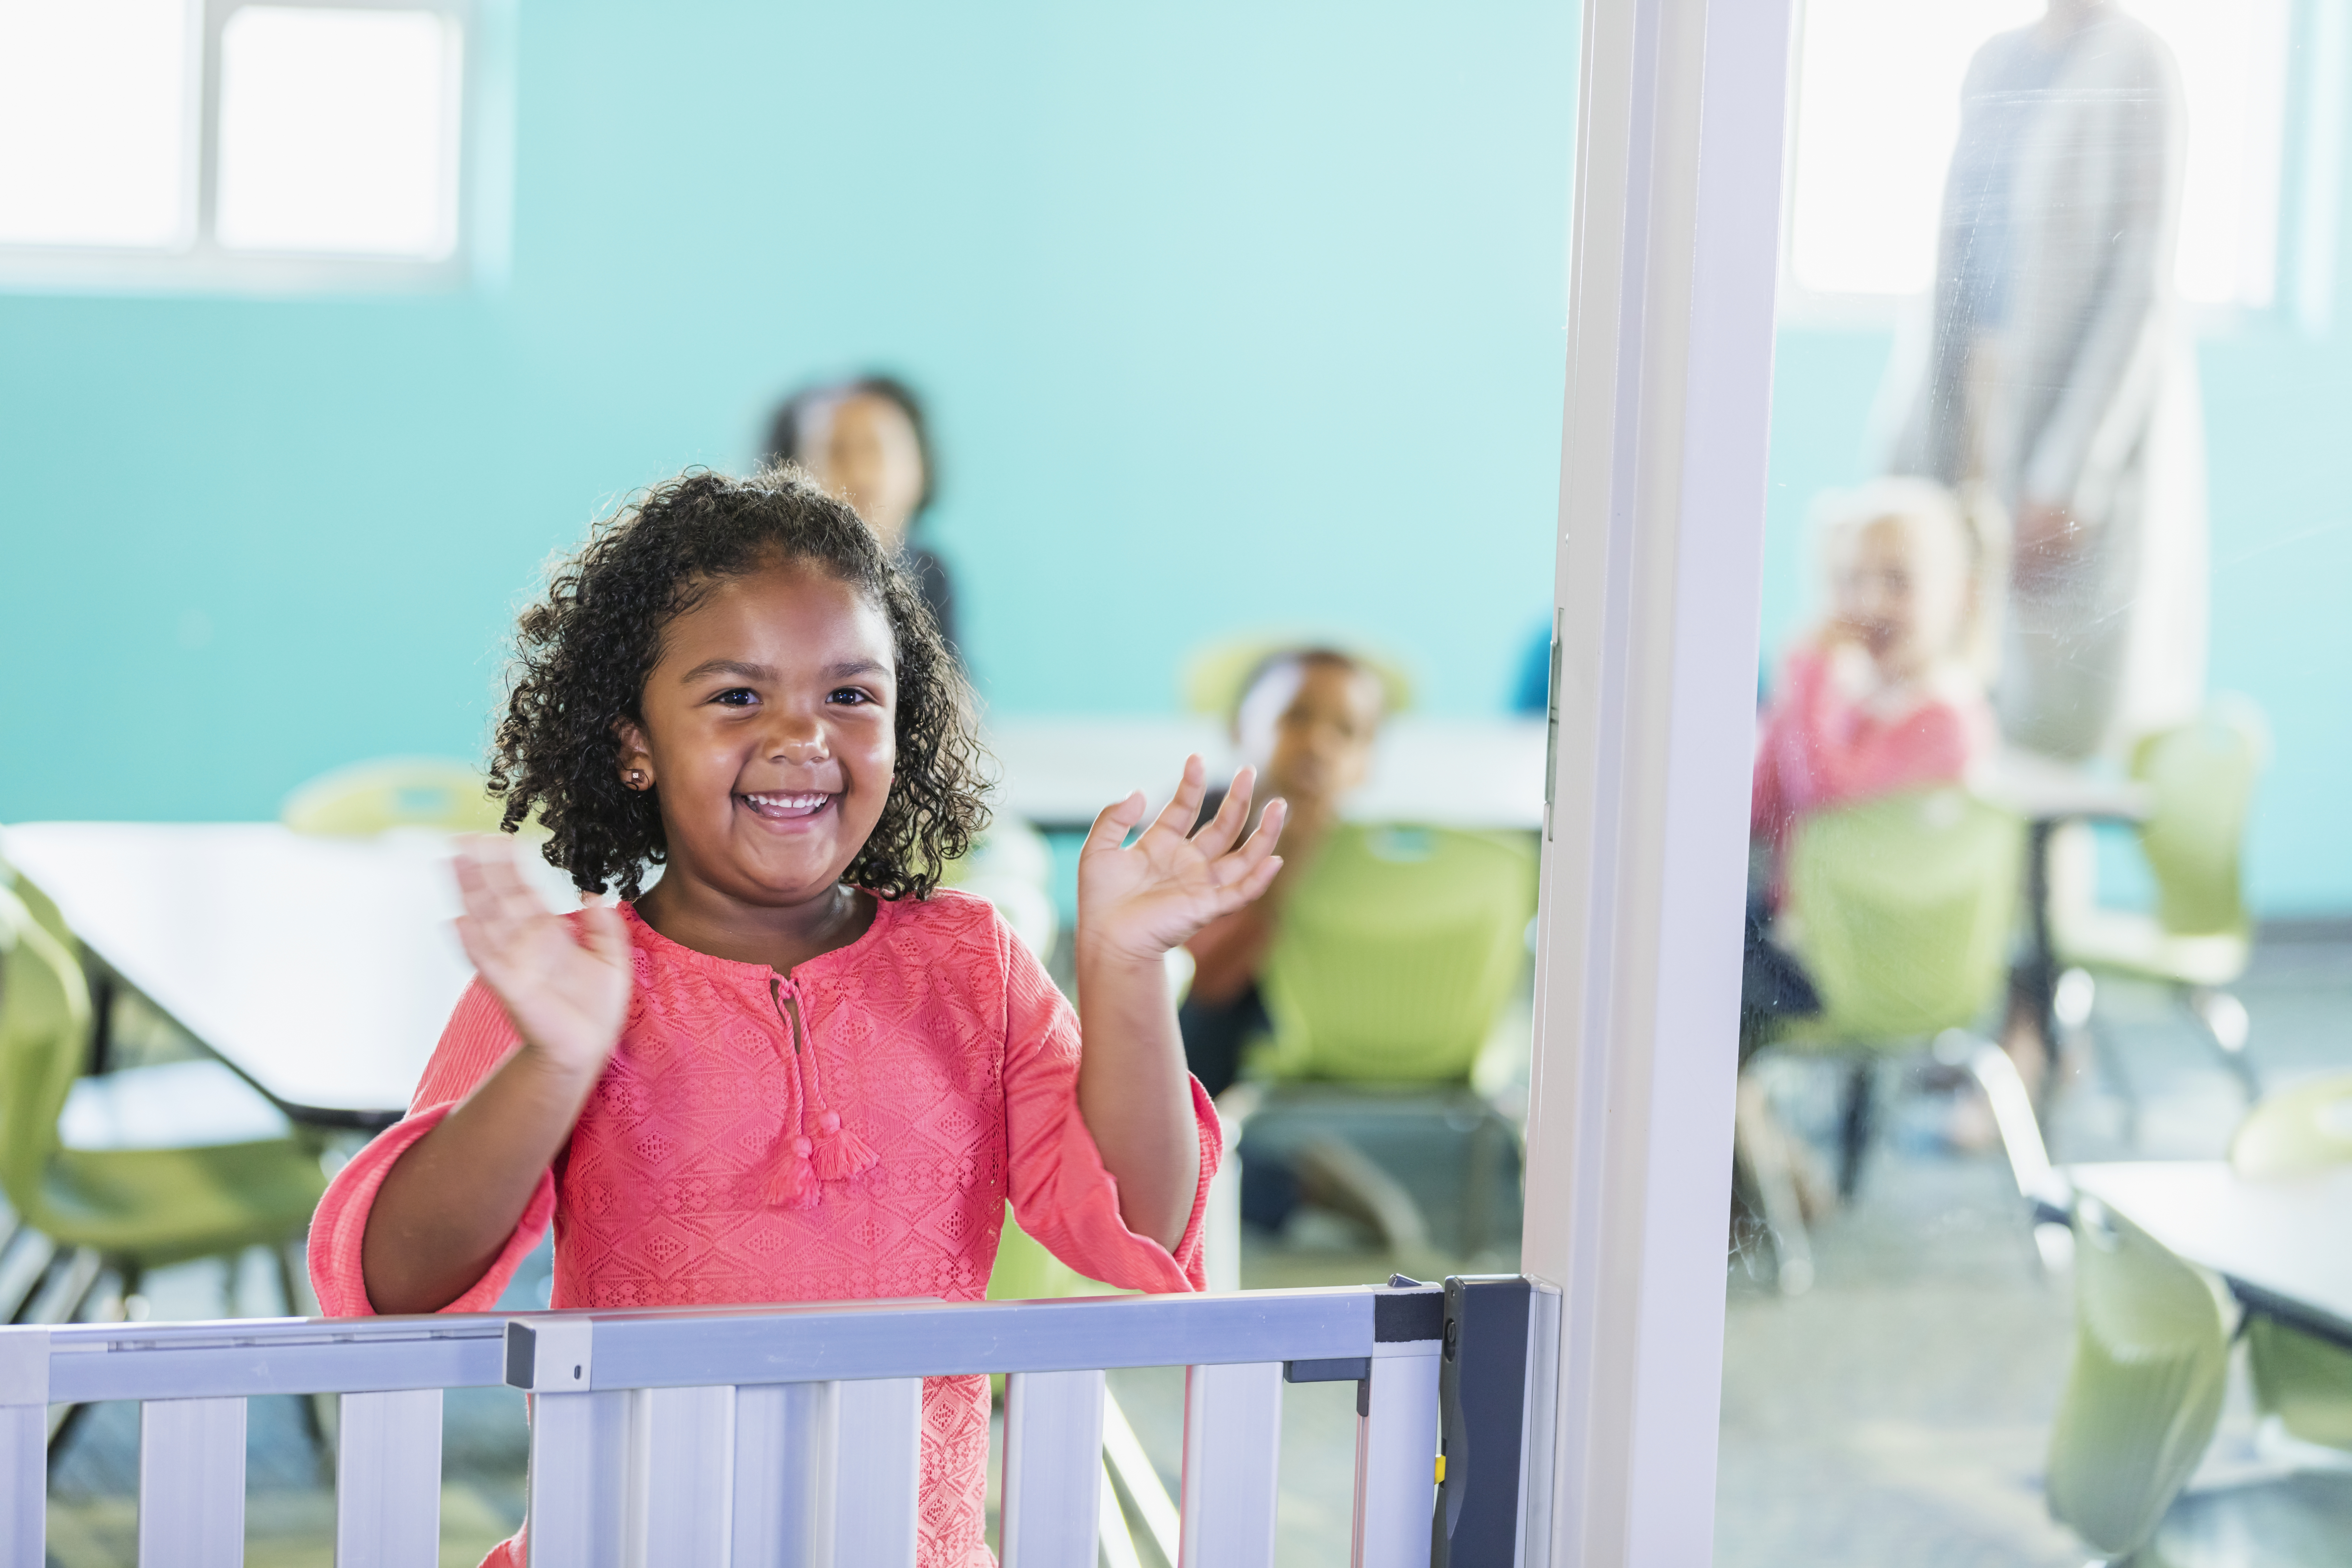 Mixed race girl in preschool smiling, waving